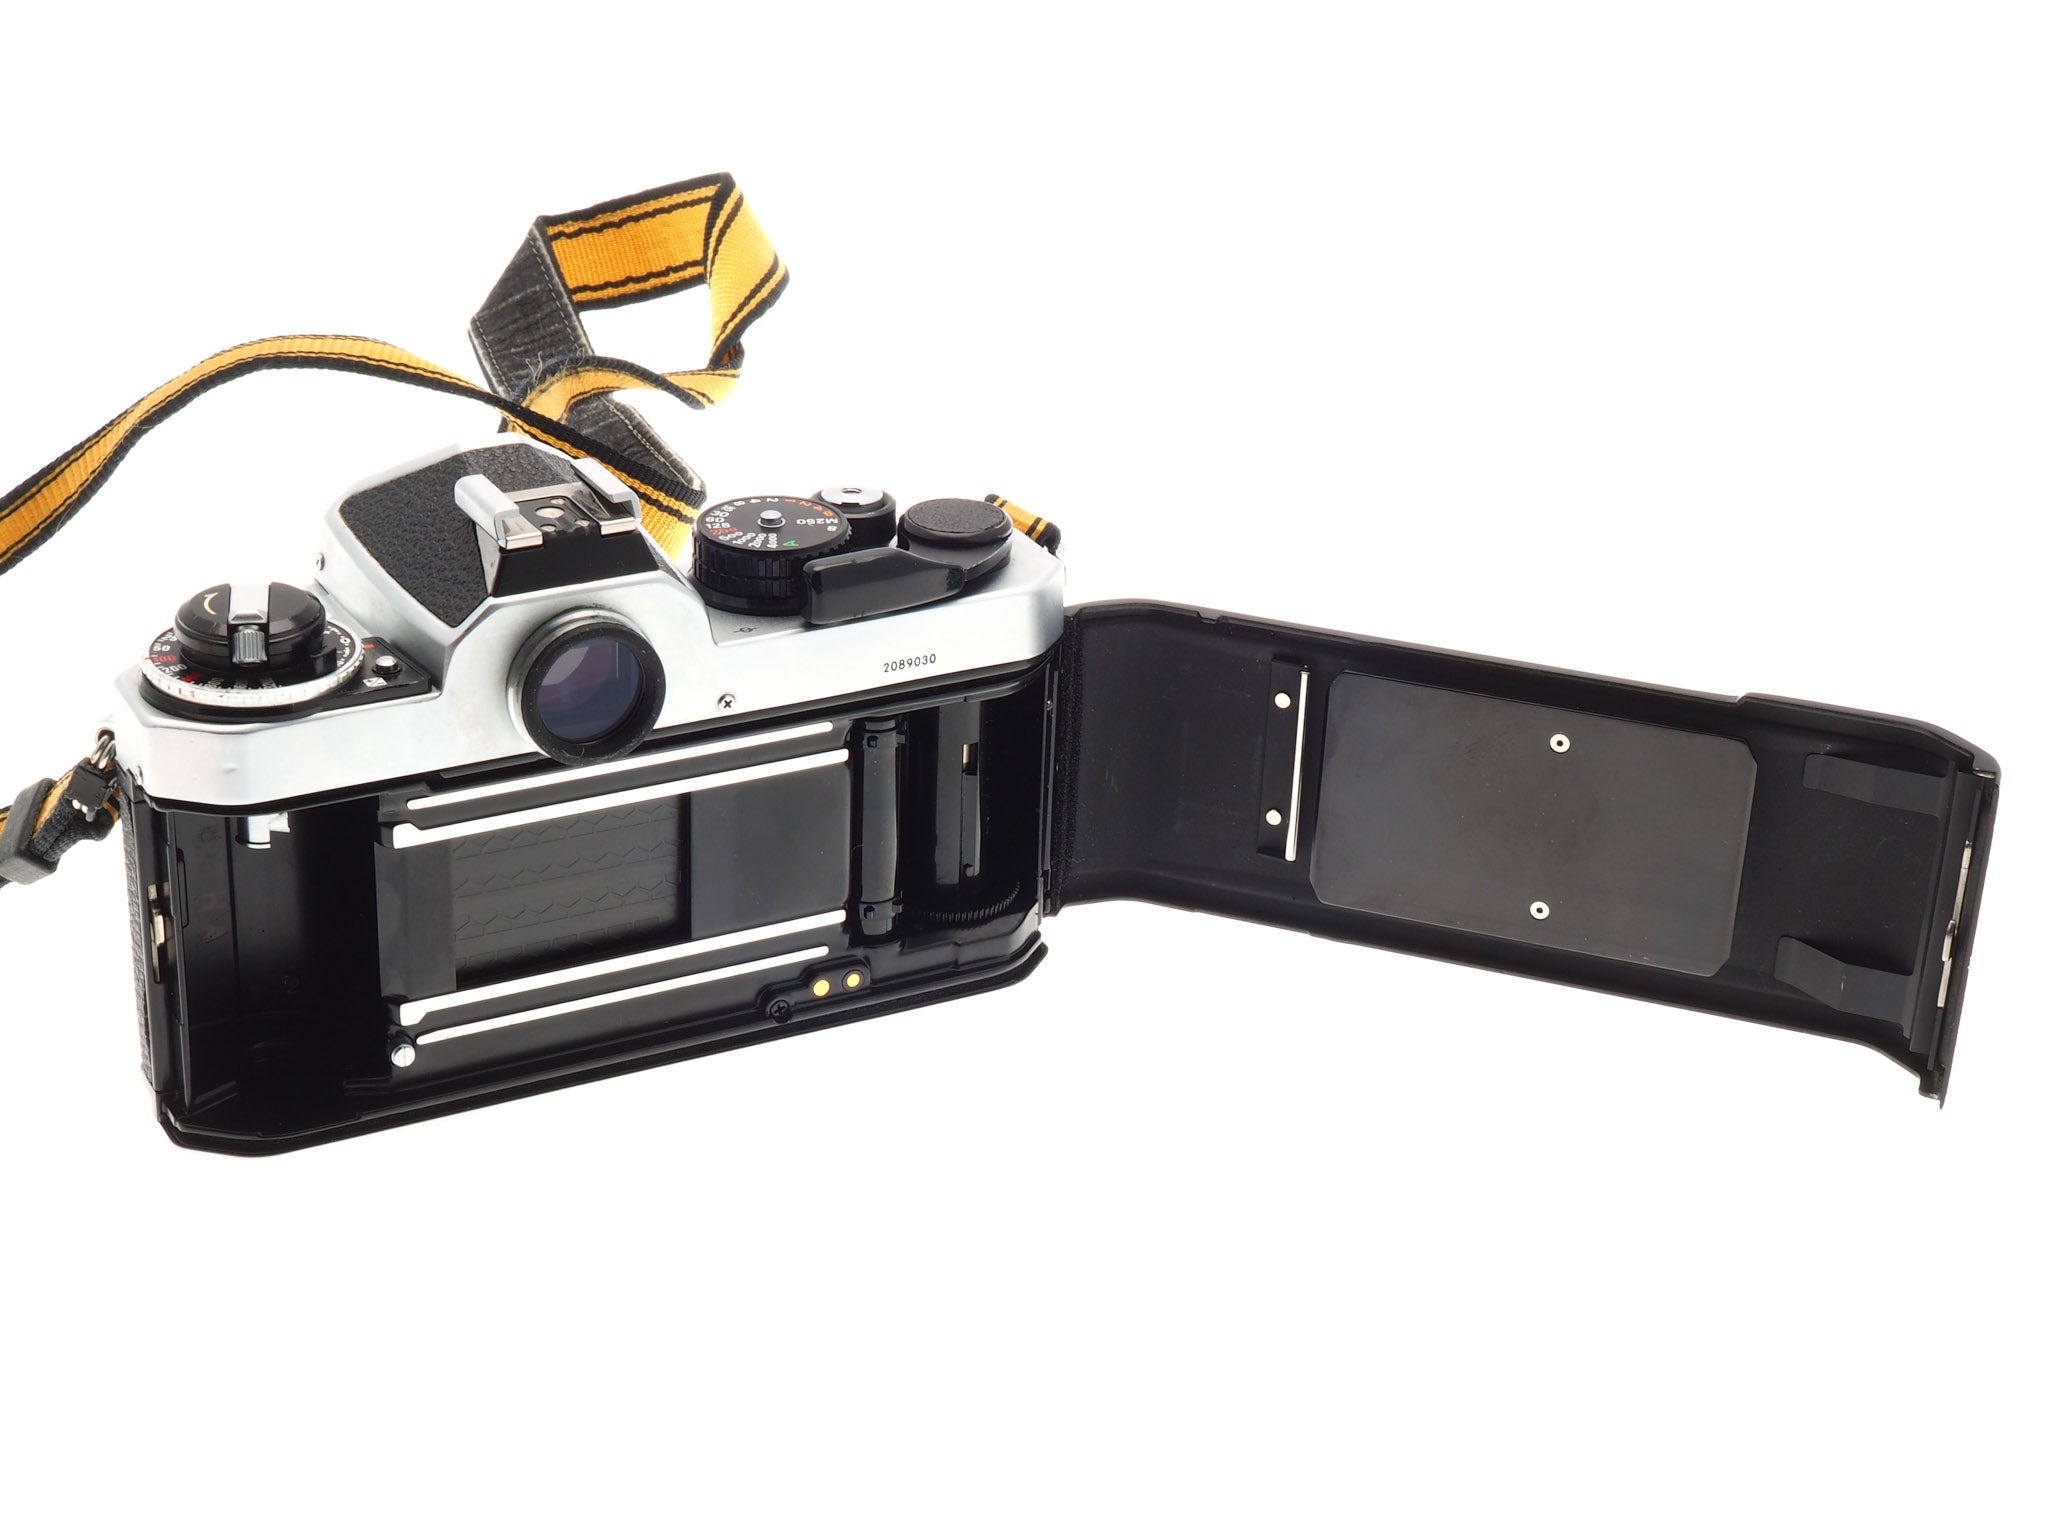 Nikon FE2 - 35mm Film Camera Body - with 6 month warranty